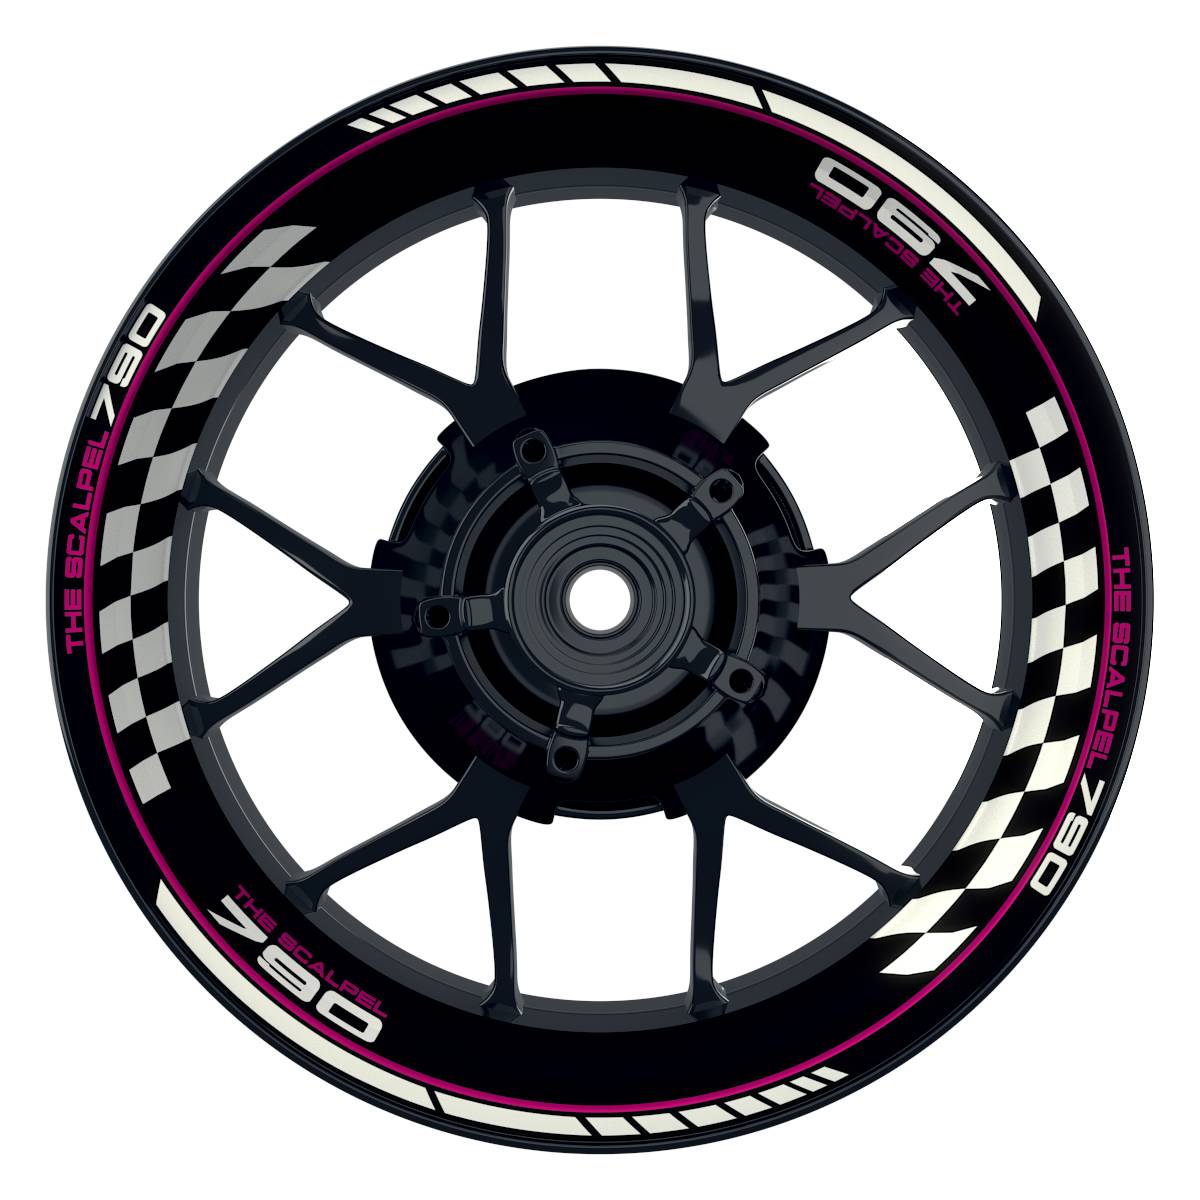 THE SCALPEL 790 Grid schwarz pink Wheelsticker Felgenaufkleber